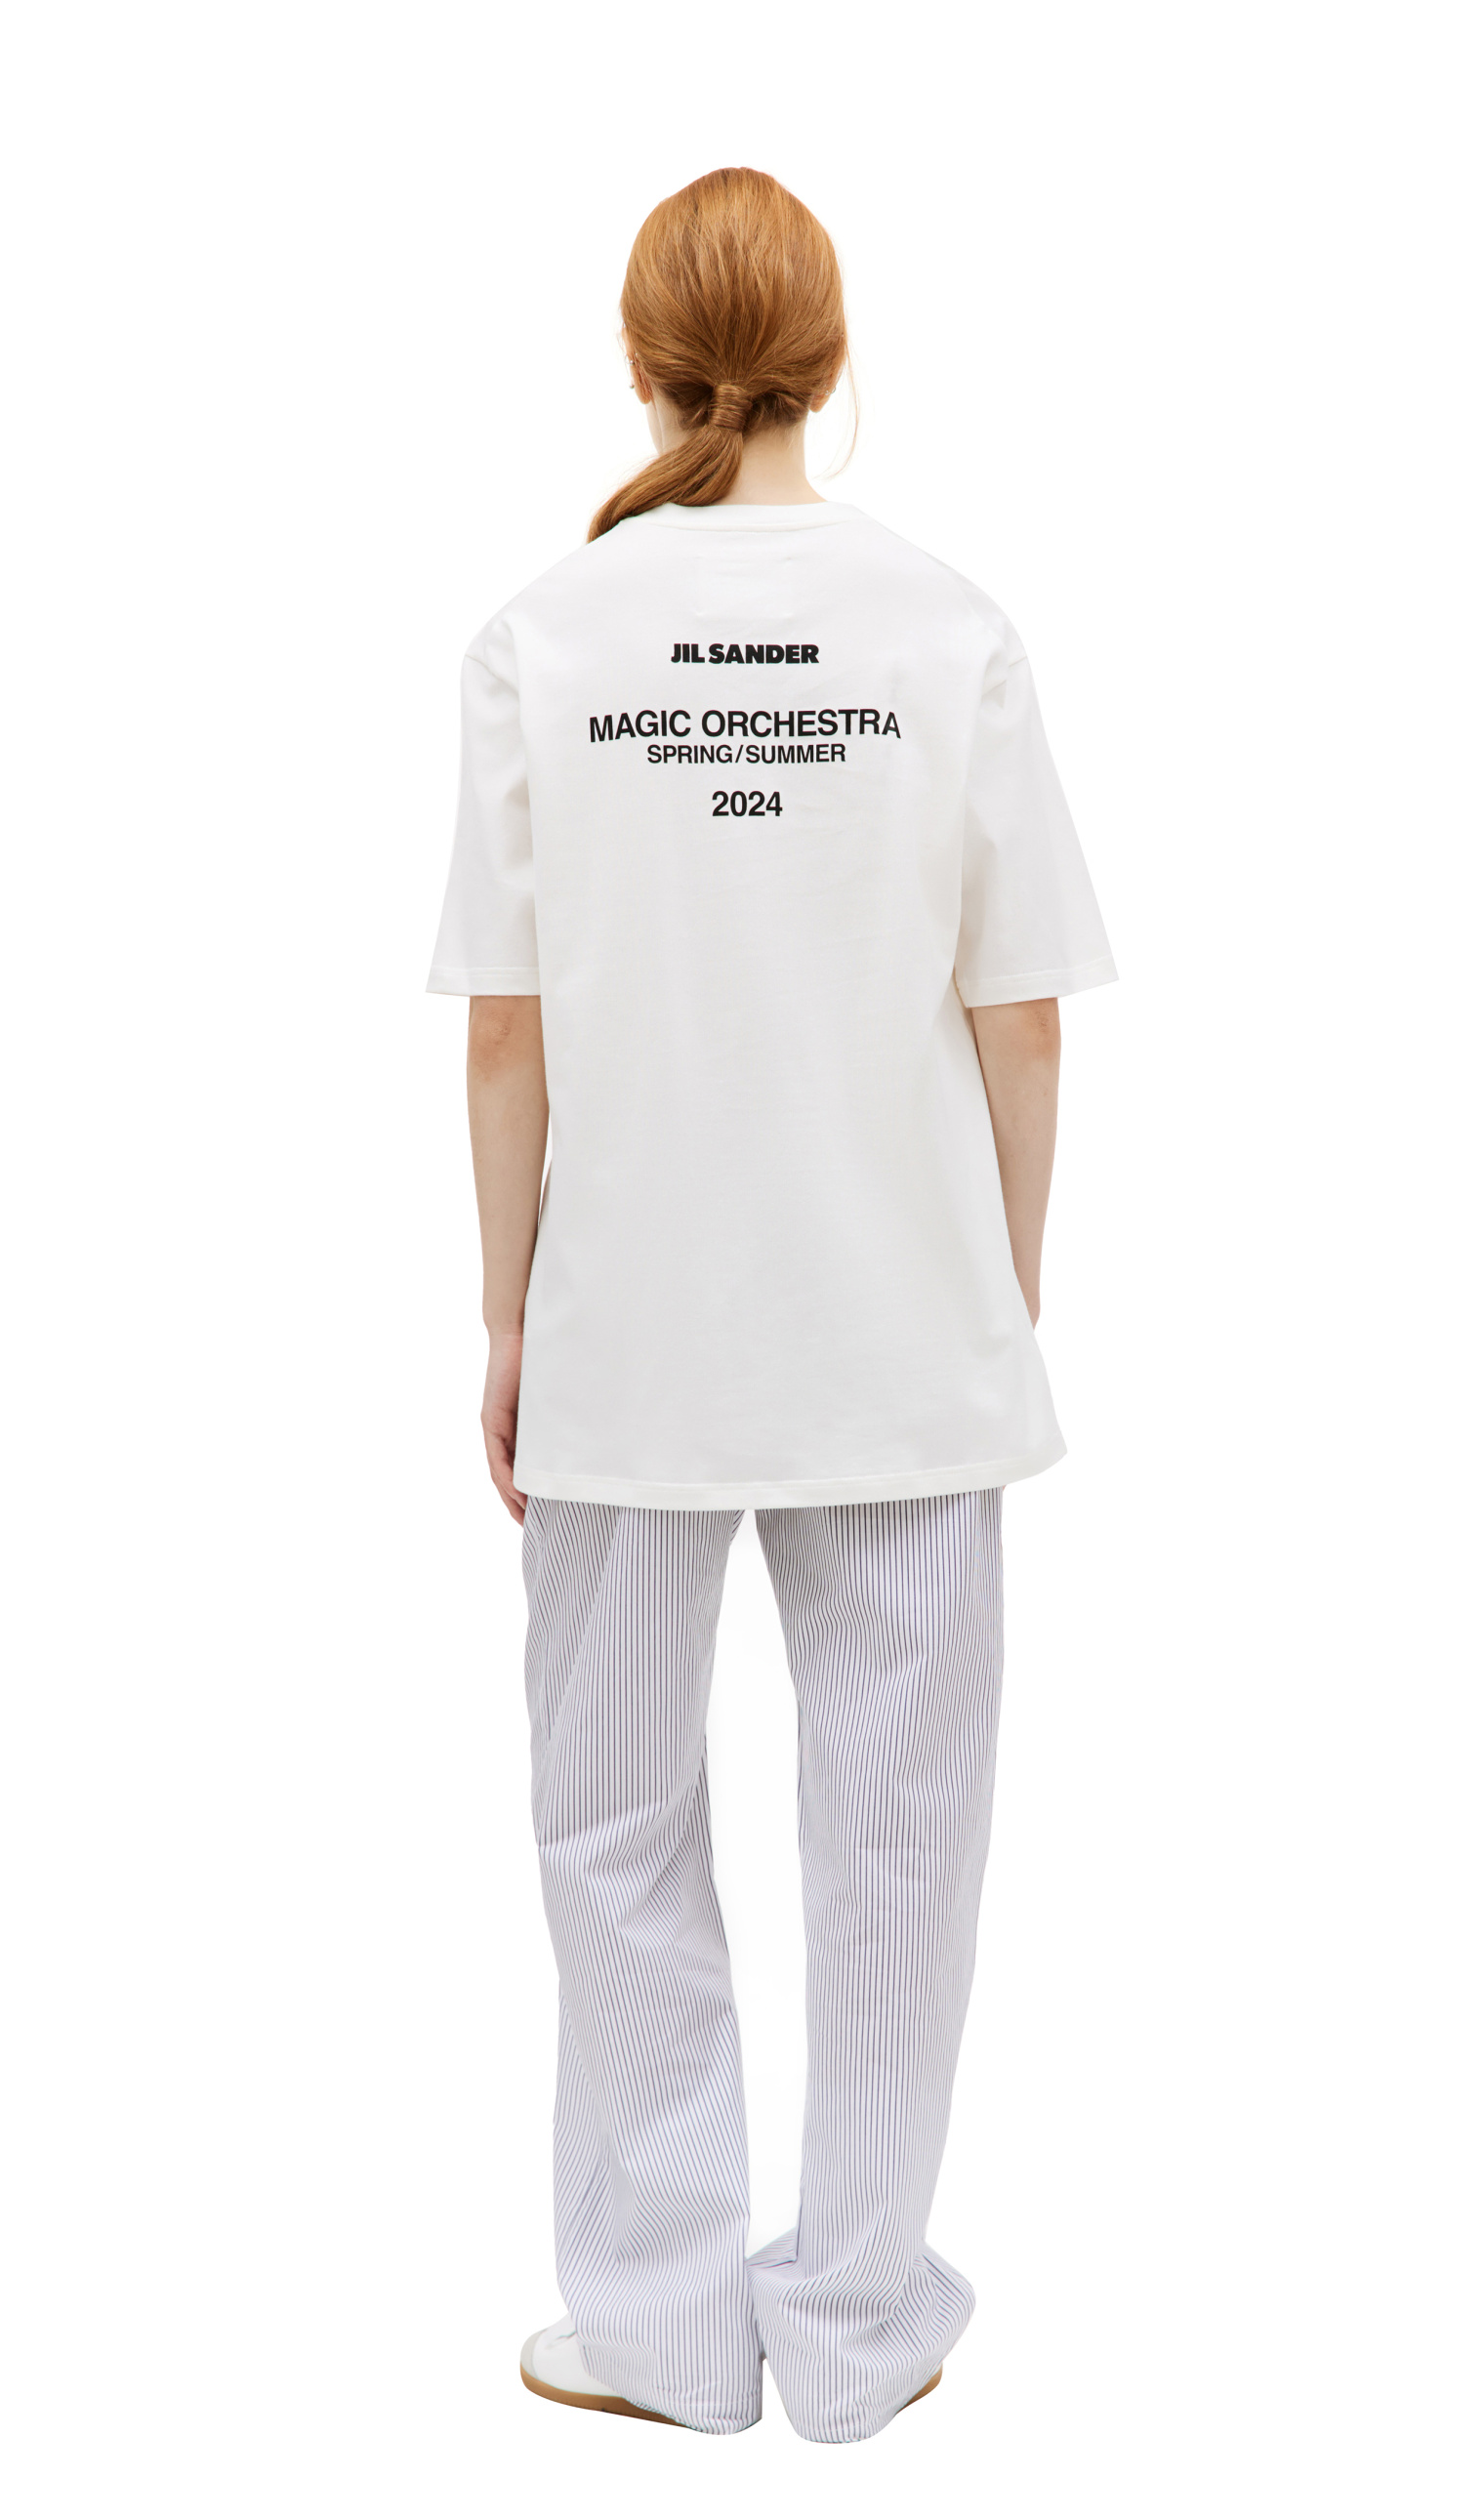 Jil Sander White graphic print t-shirt